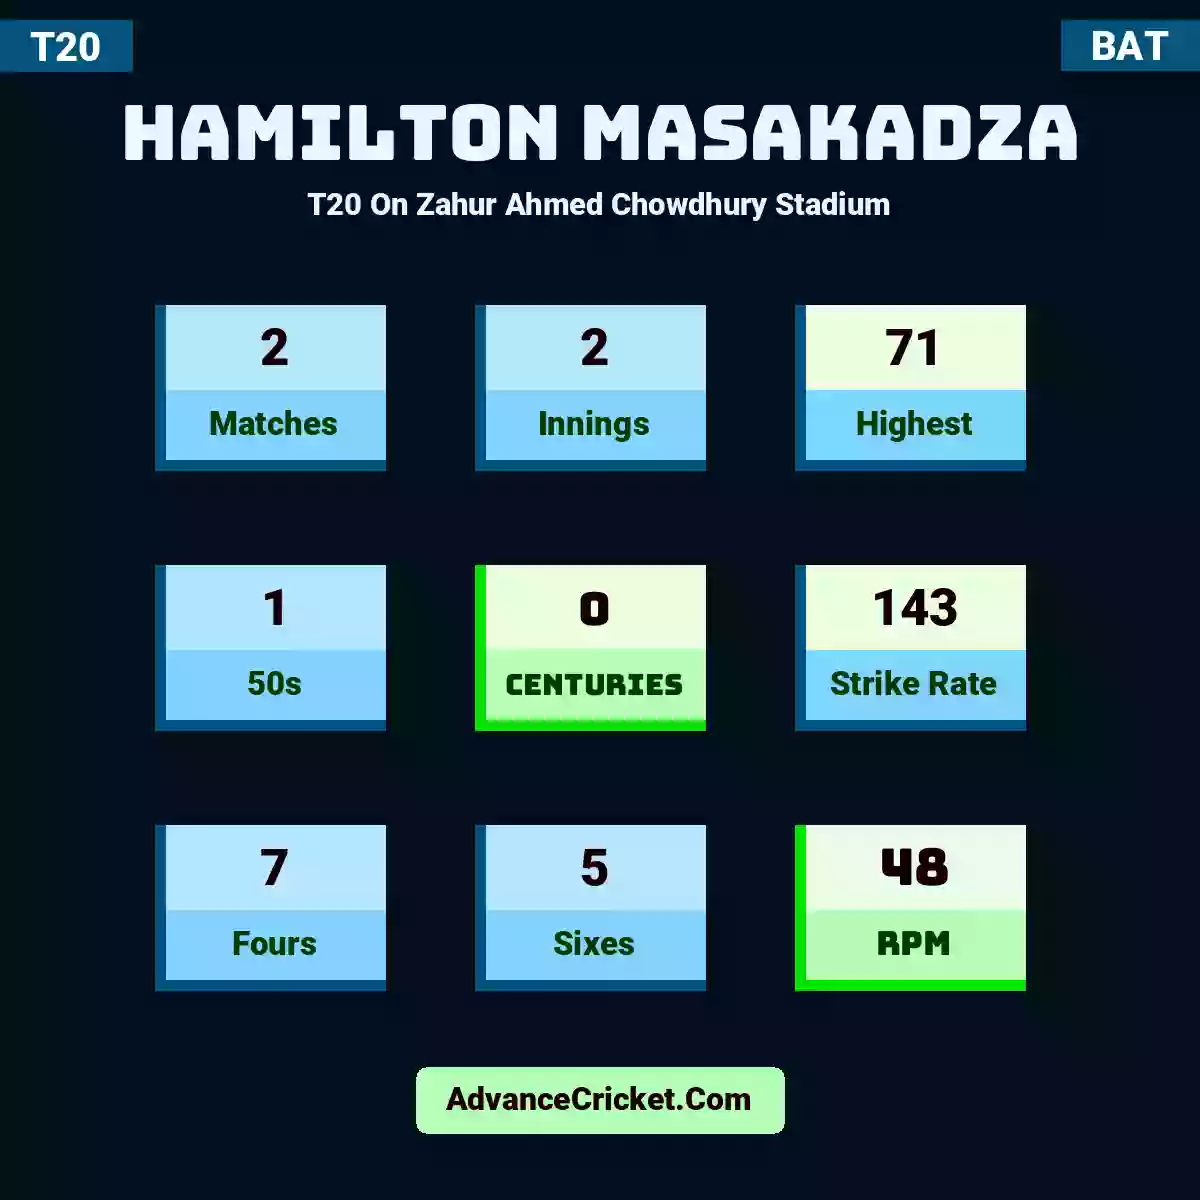 Hamilton Masakadza T20  On Zahur Ahmed Chowdhury Stadium, Hamilton Masakadza played 2 matches, scored 71 runs as highest, 1 half-centuries, and 0 centuries, with a strike rate of 143. H.Masakadza hit 7 fours and 5 sixes, with an RPM of 48.